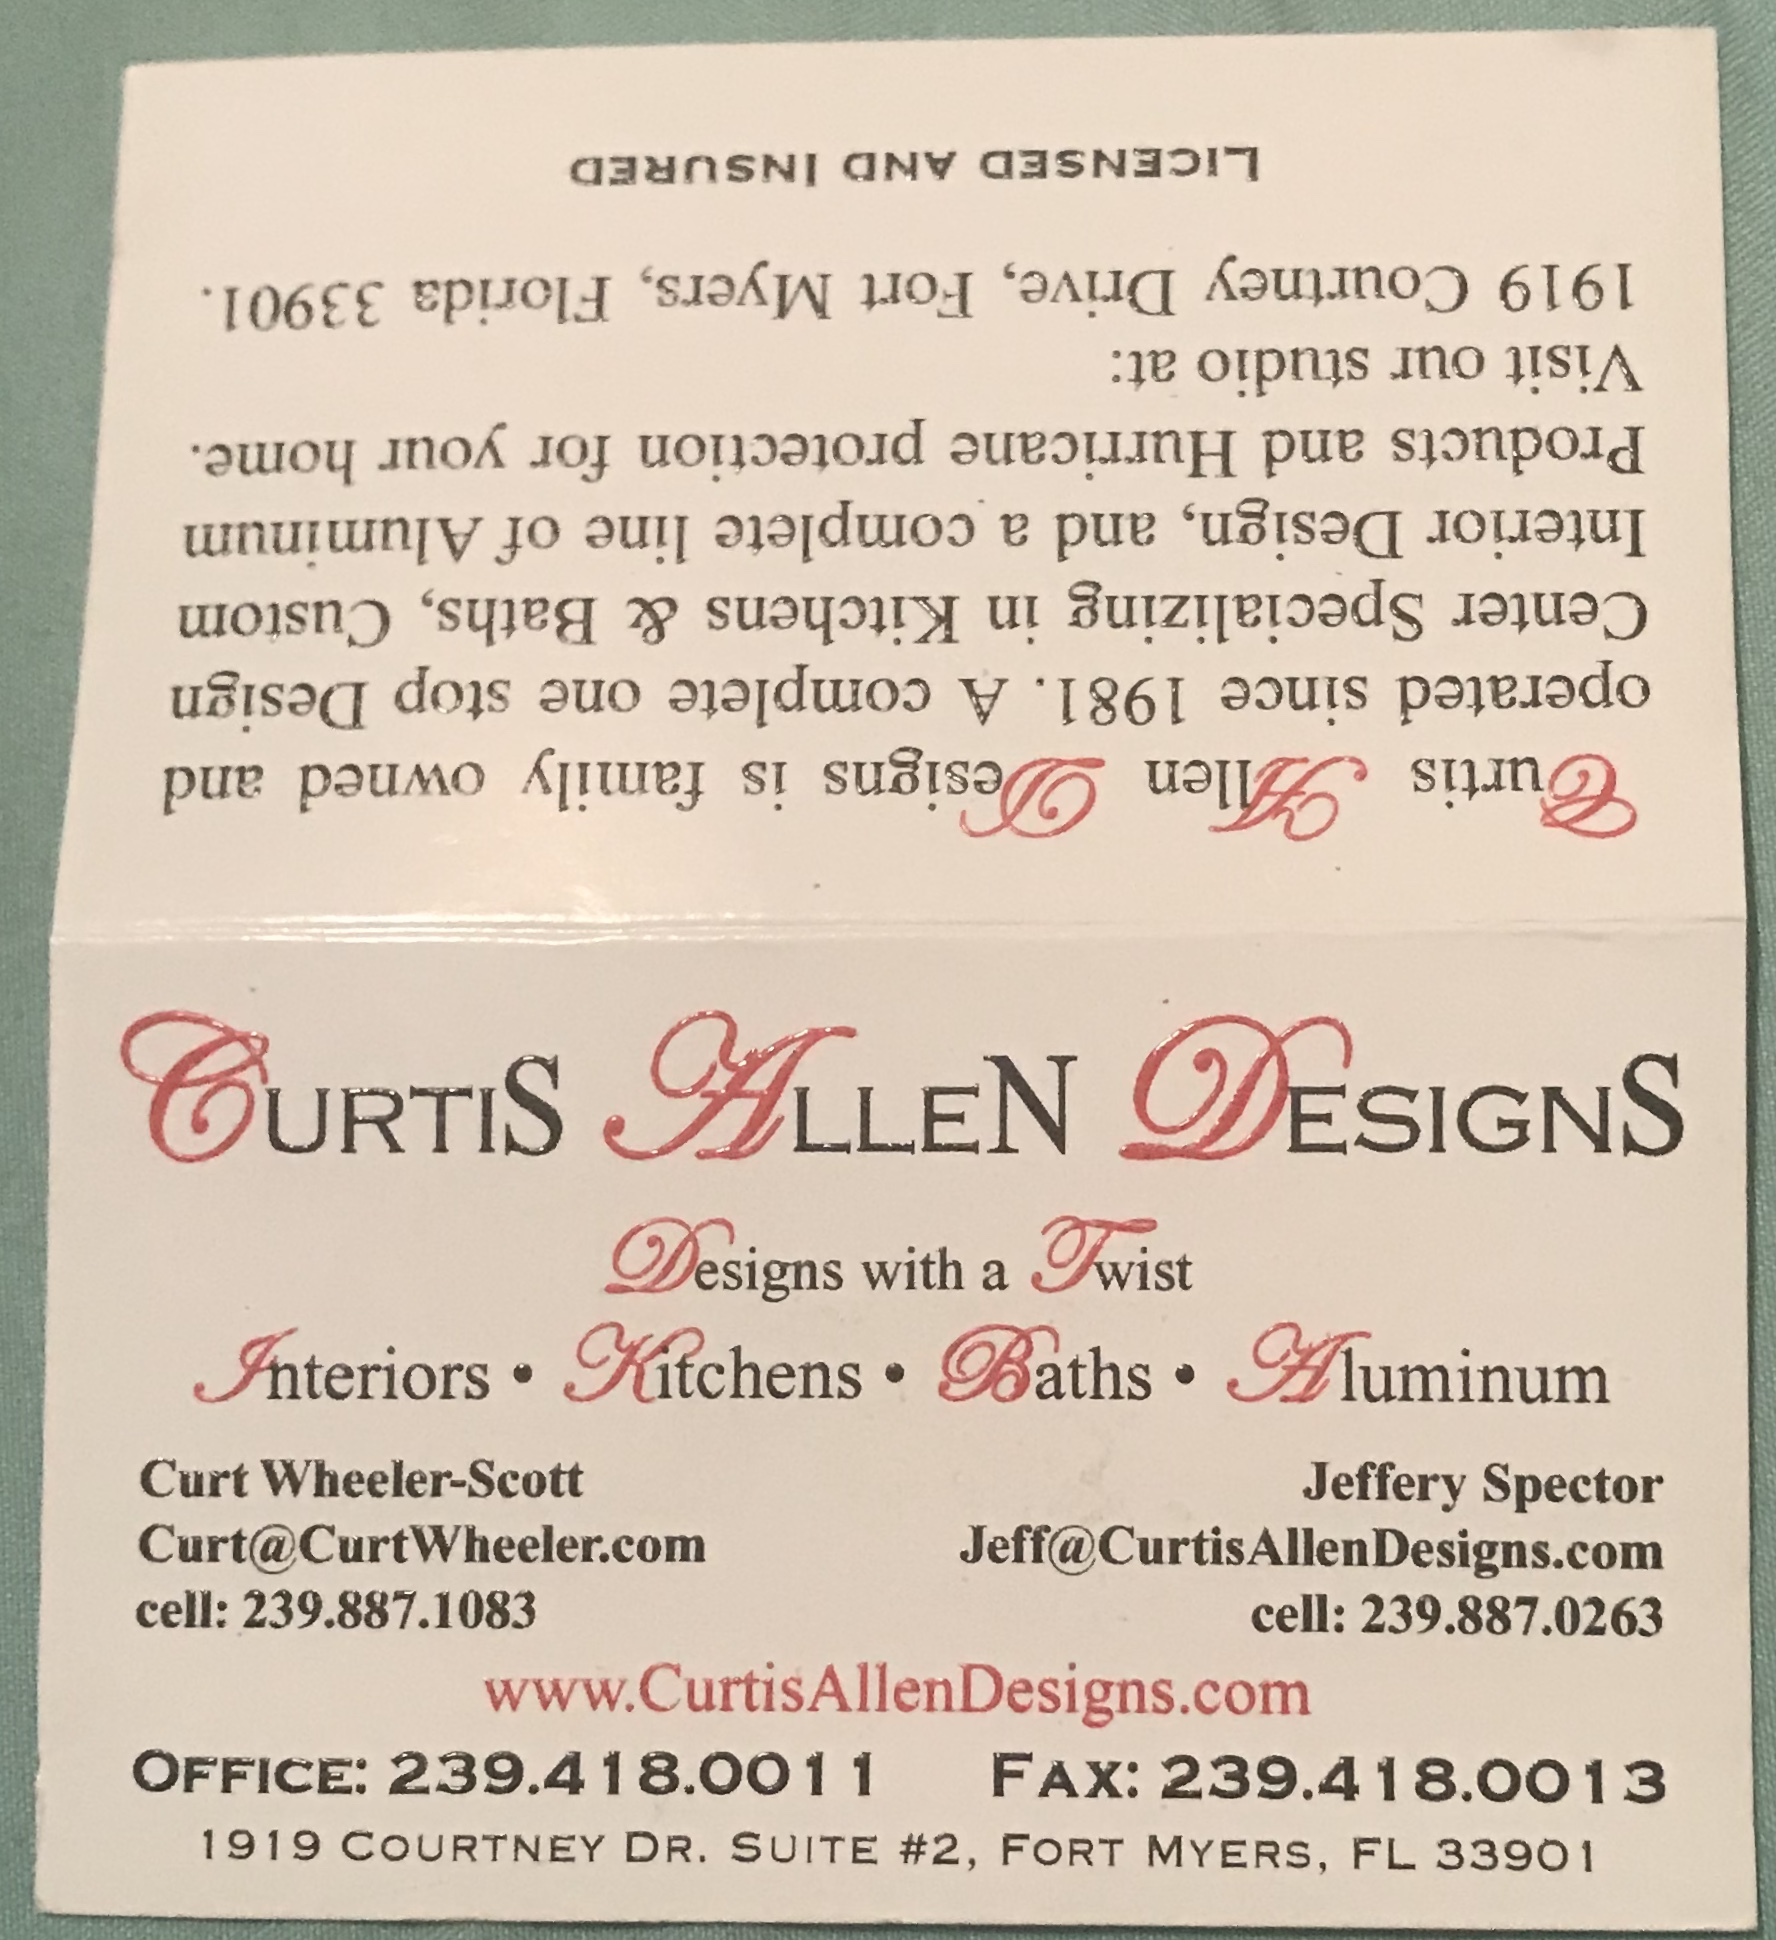 Their business card